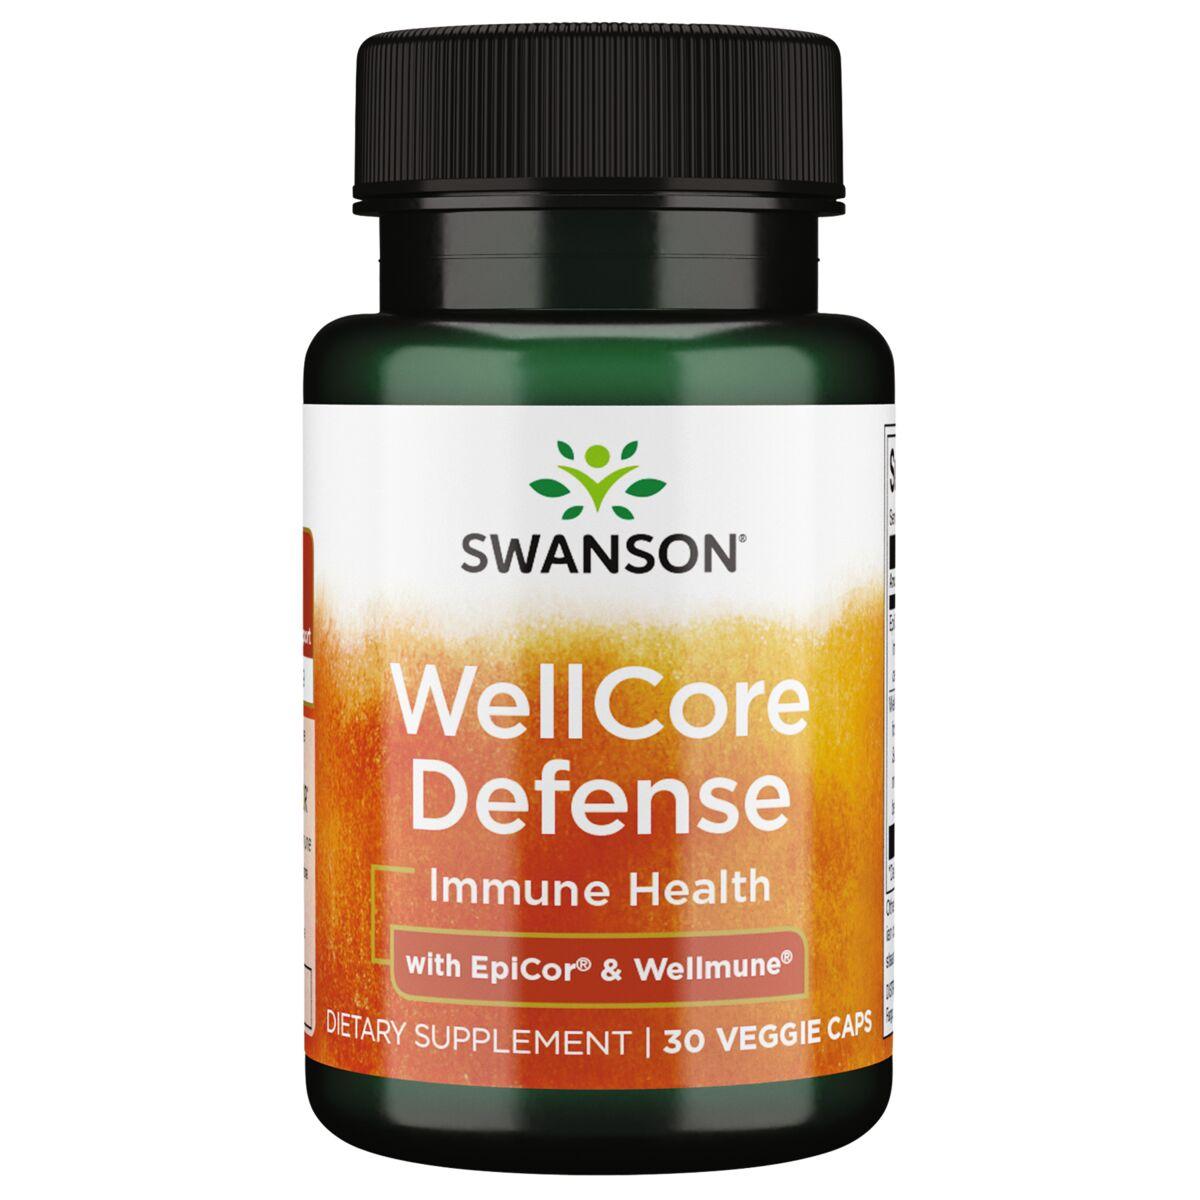 Swanson Ultra Wellcore Defense with Wellmune & Epicor Supplement Vitamin | 30 Veg Caps